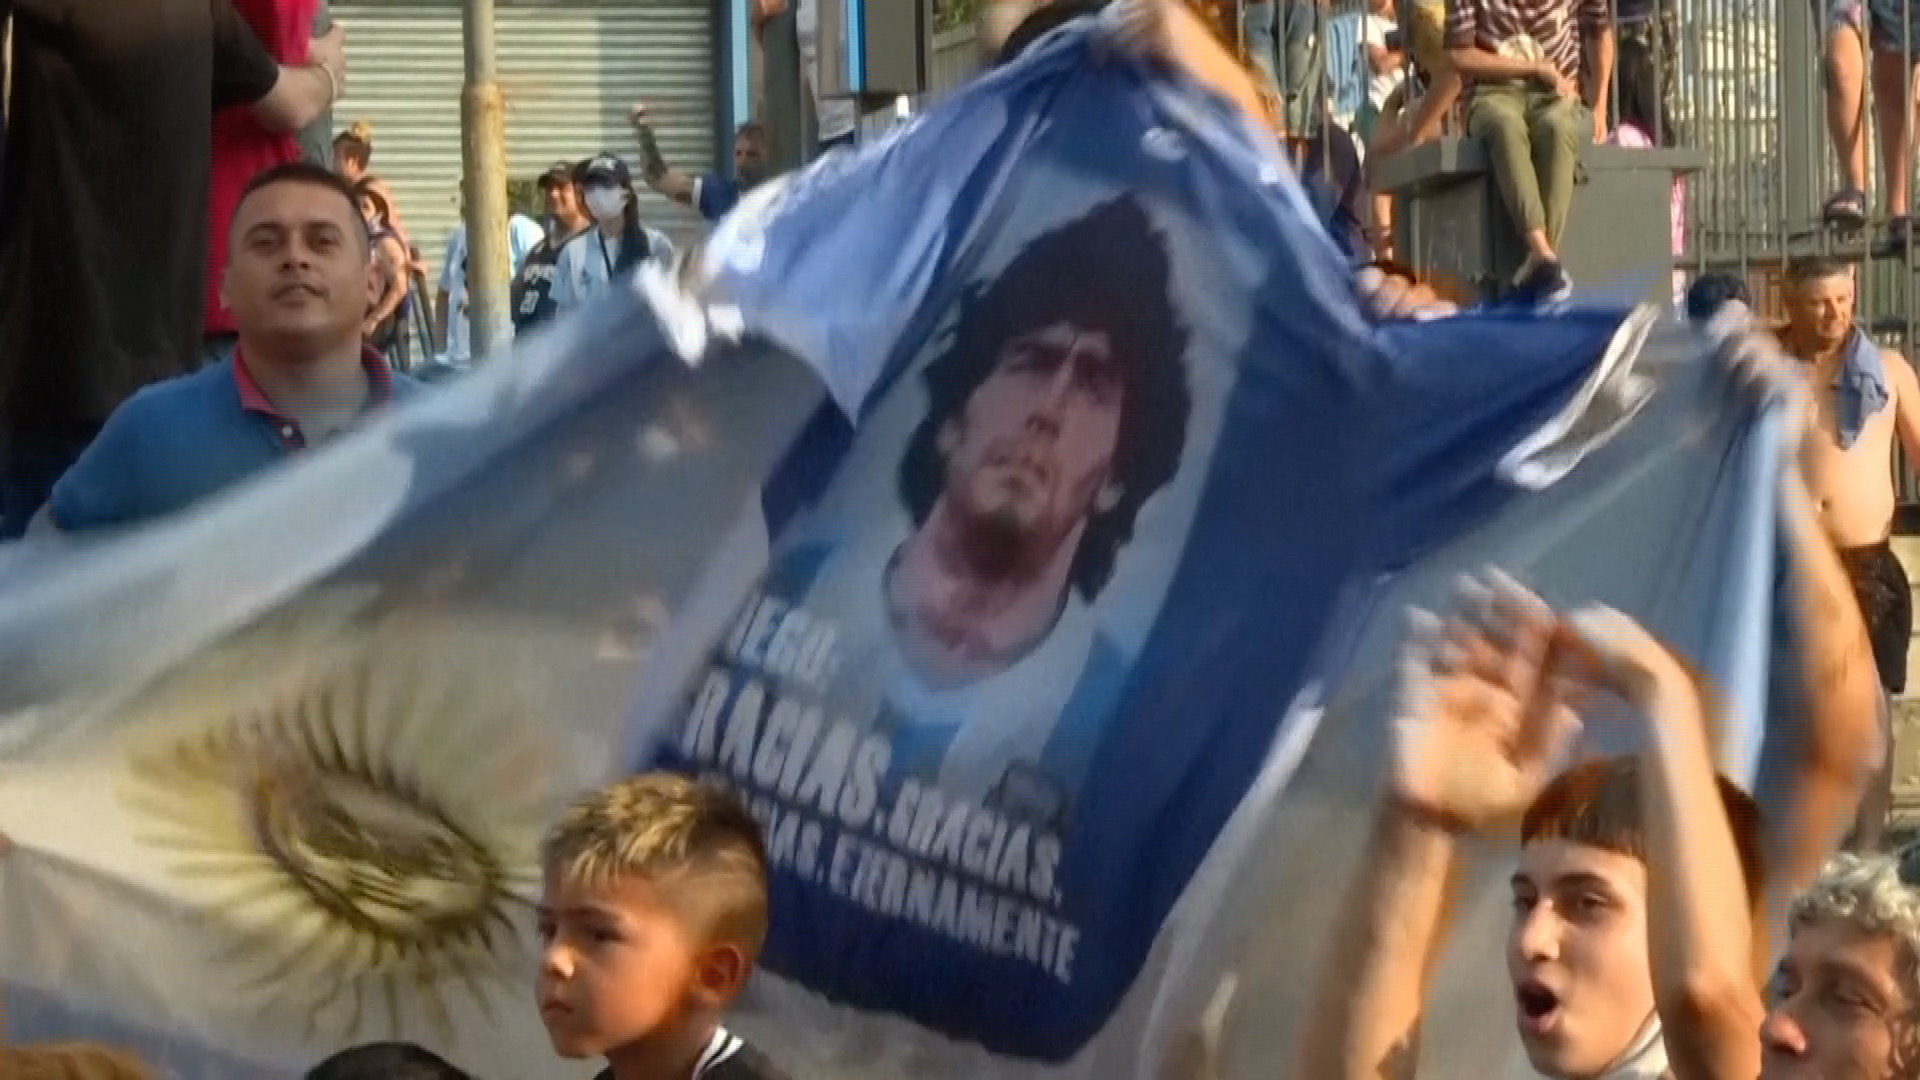 Pele mourns death of Argentine football legend Maradona - Xinhua